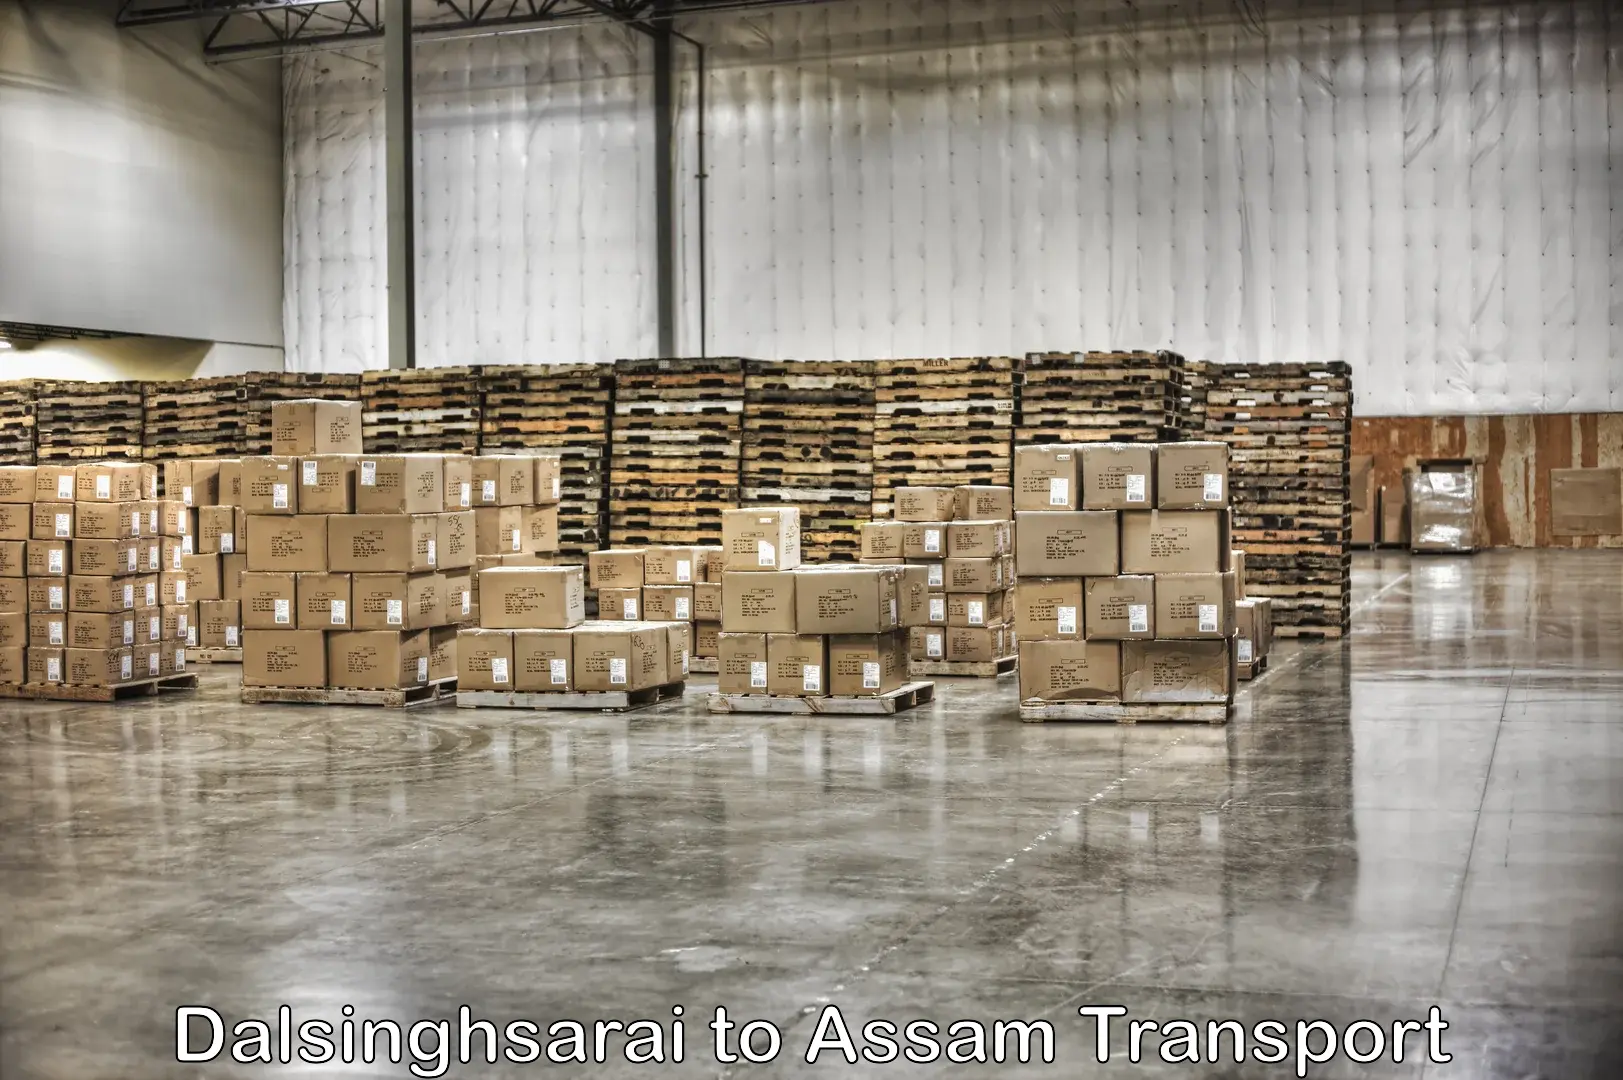 Truck transport companies in India Dalsinghsarai to Bongaigaon